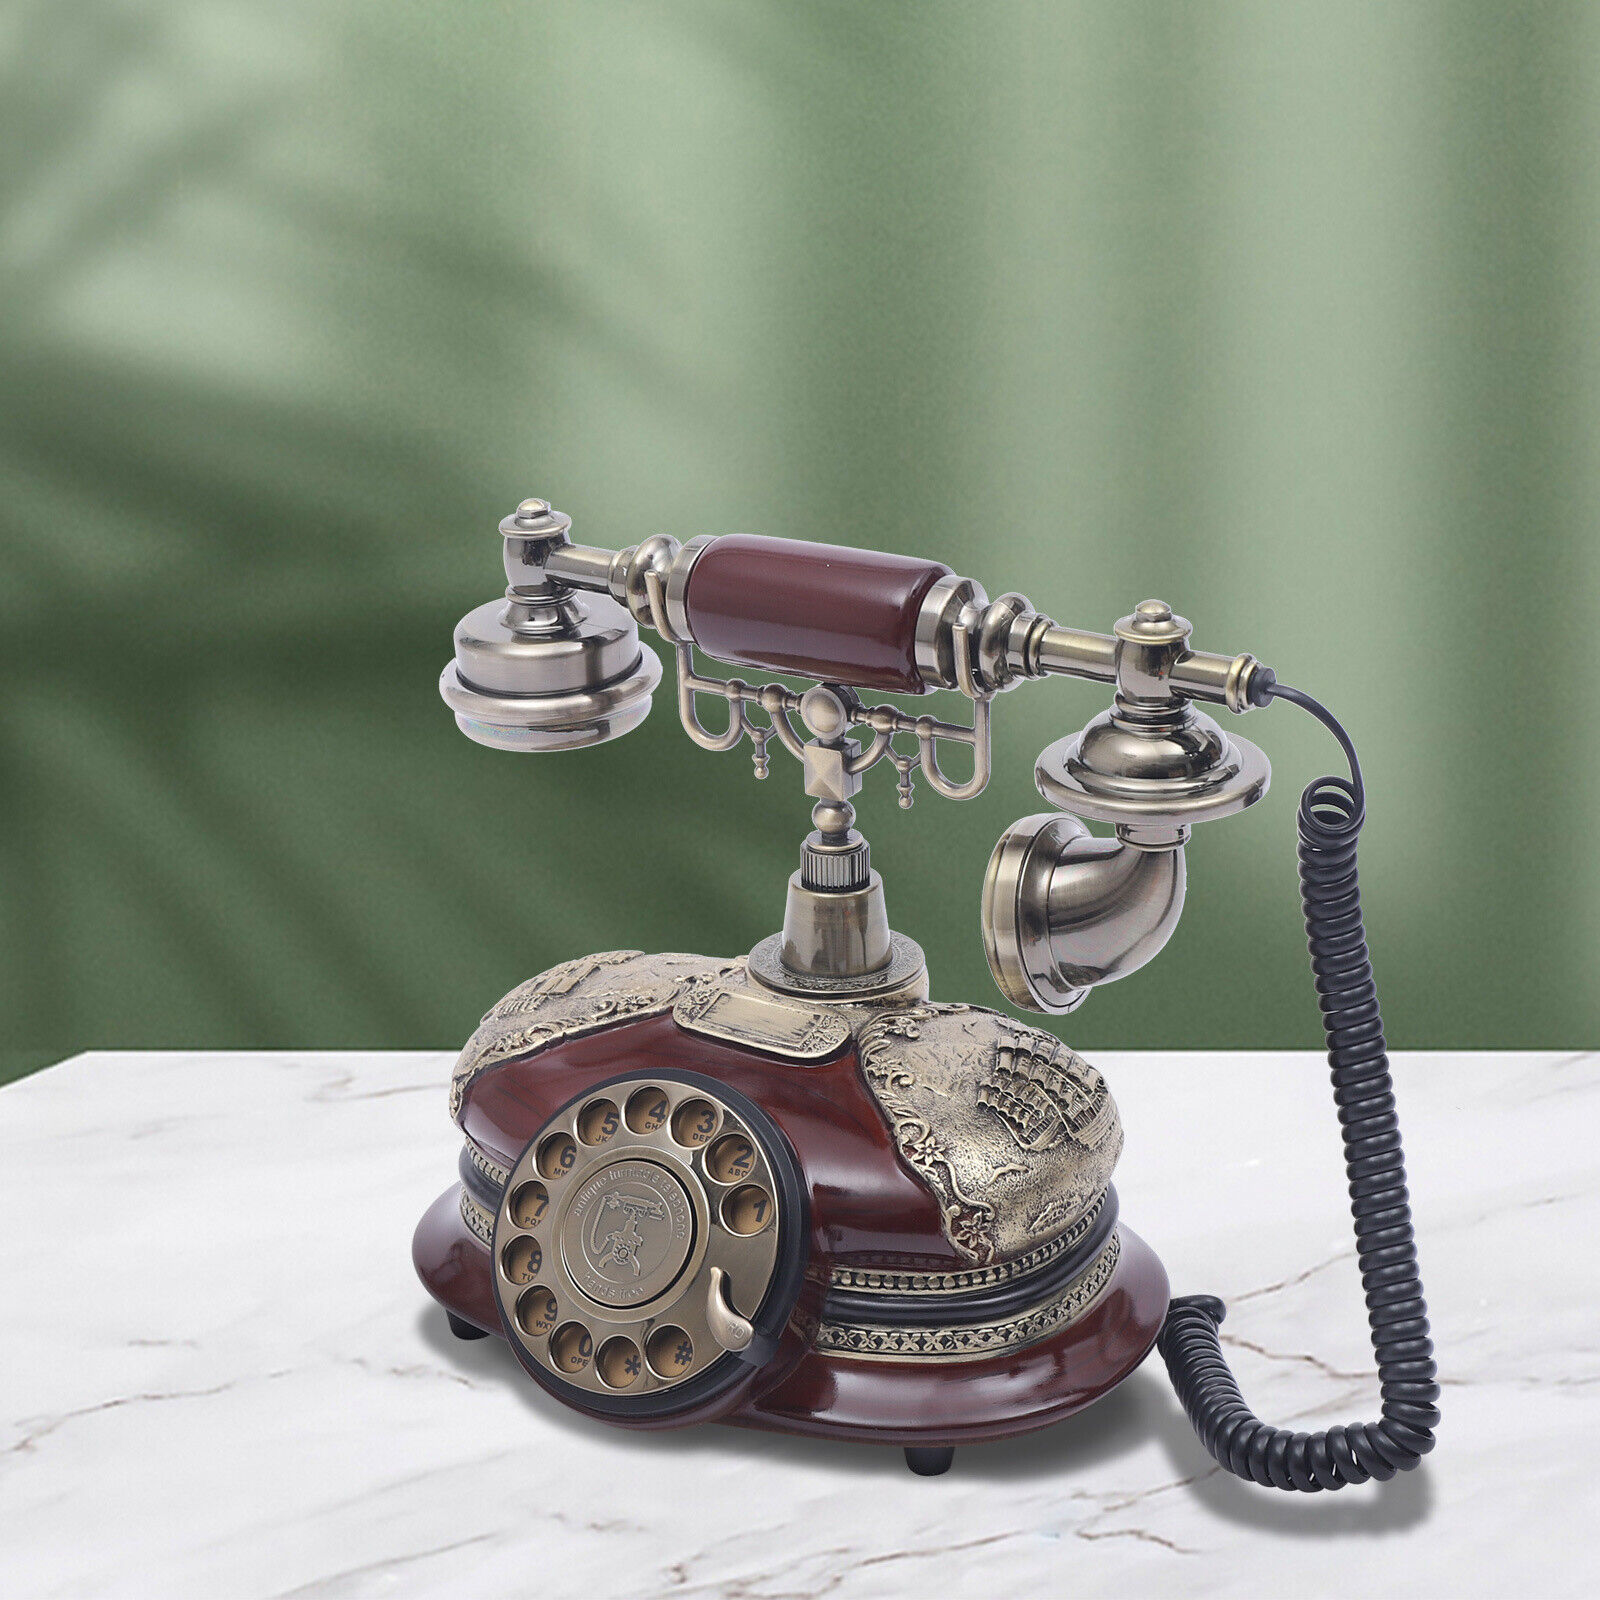 Vintage Telephone Rotary Victorian 1960s Style Desk Decorative Dial Phone Decor